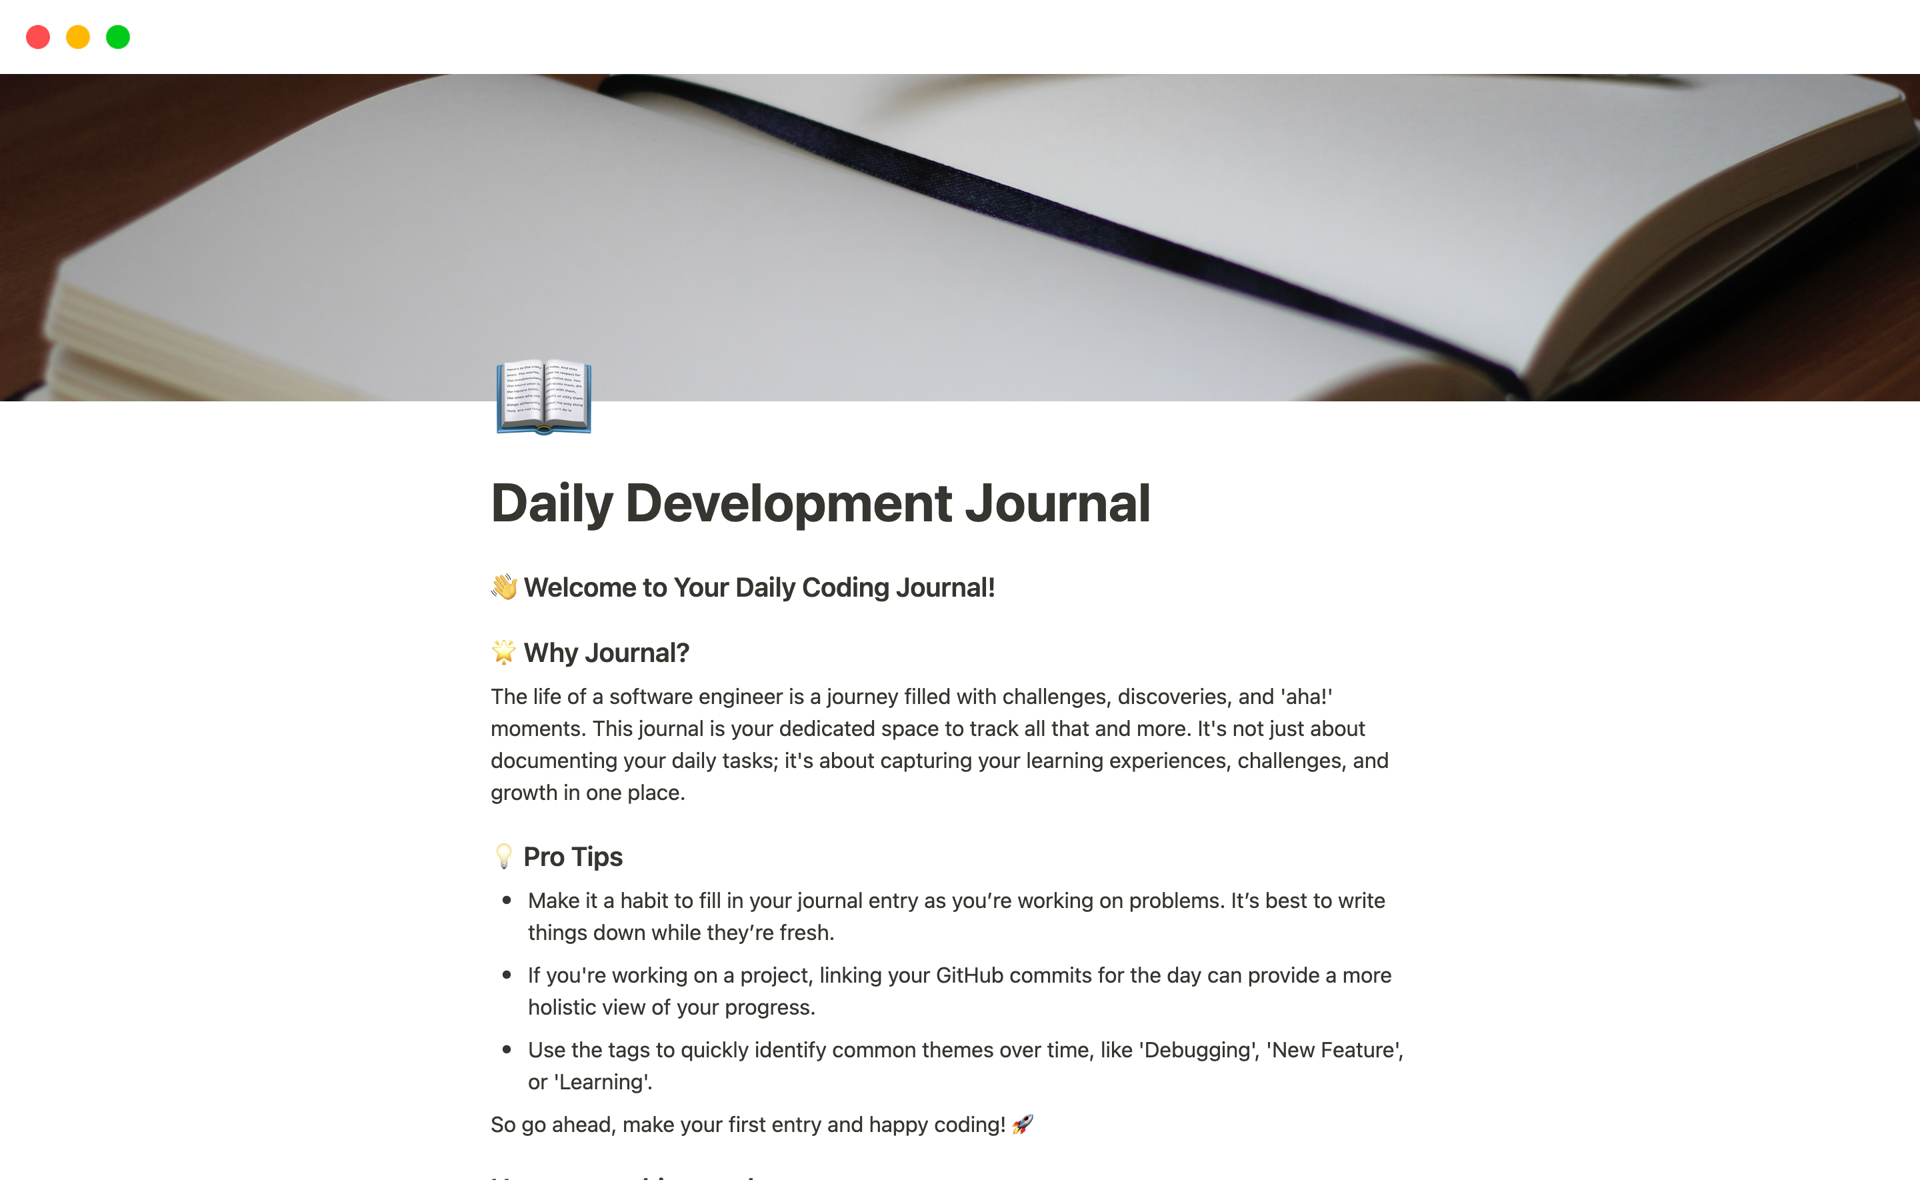 Vista previa de una plantilla para Daily Development Journal